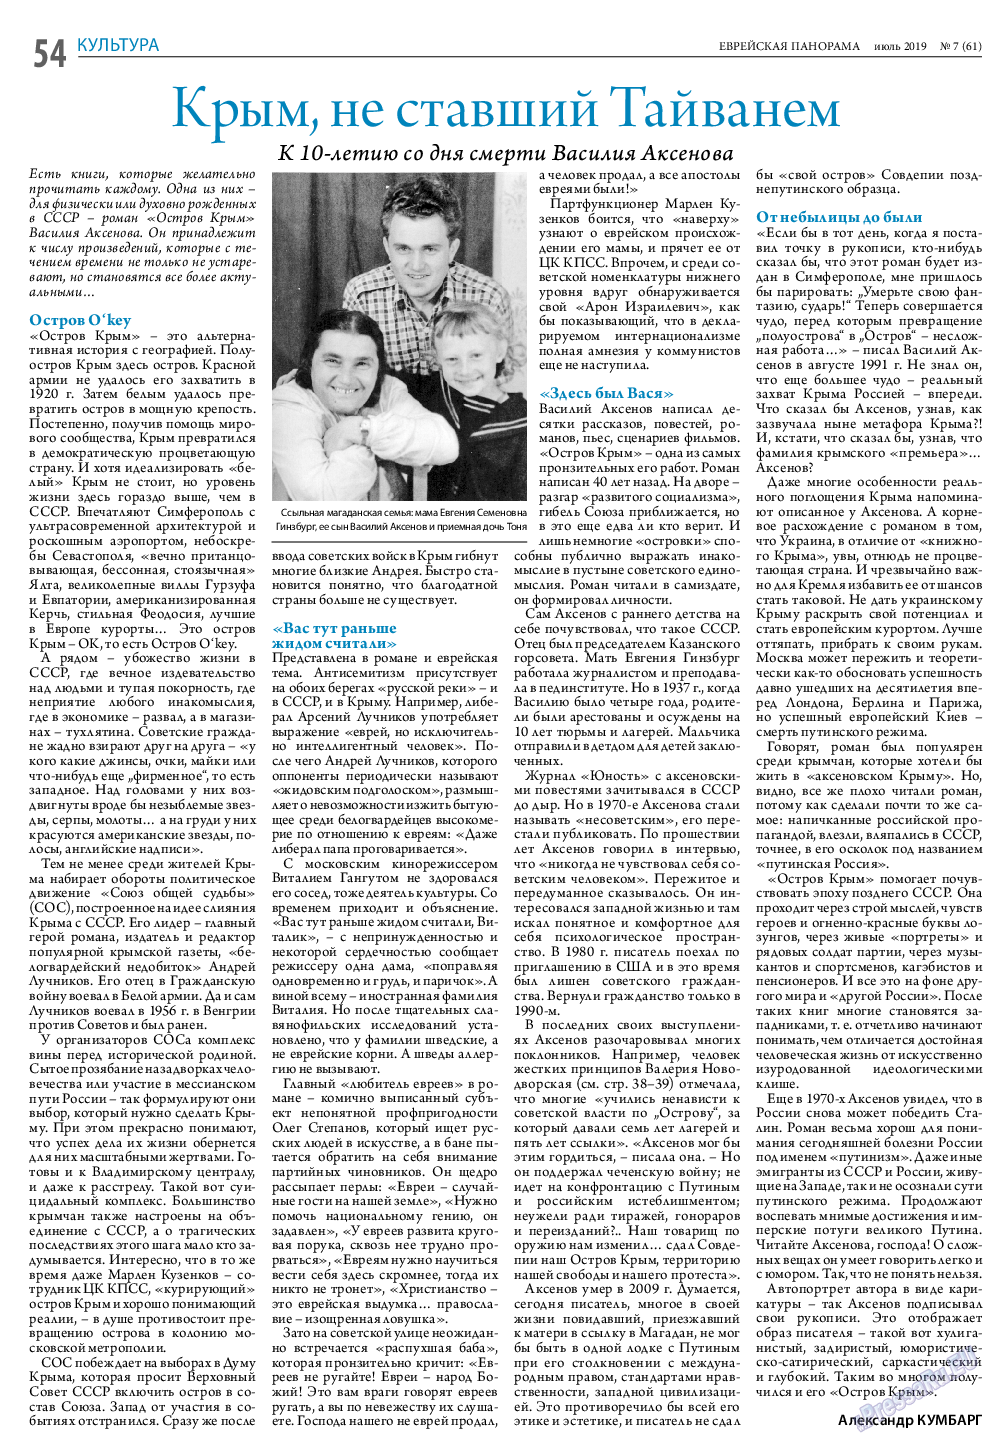 Еврейская панорама, газета. 2019 №7 стр.54